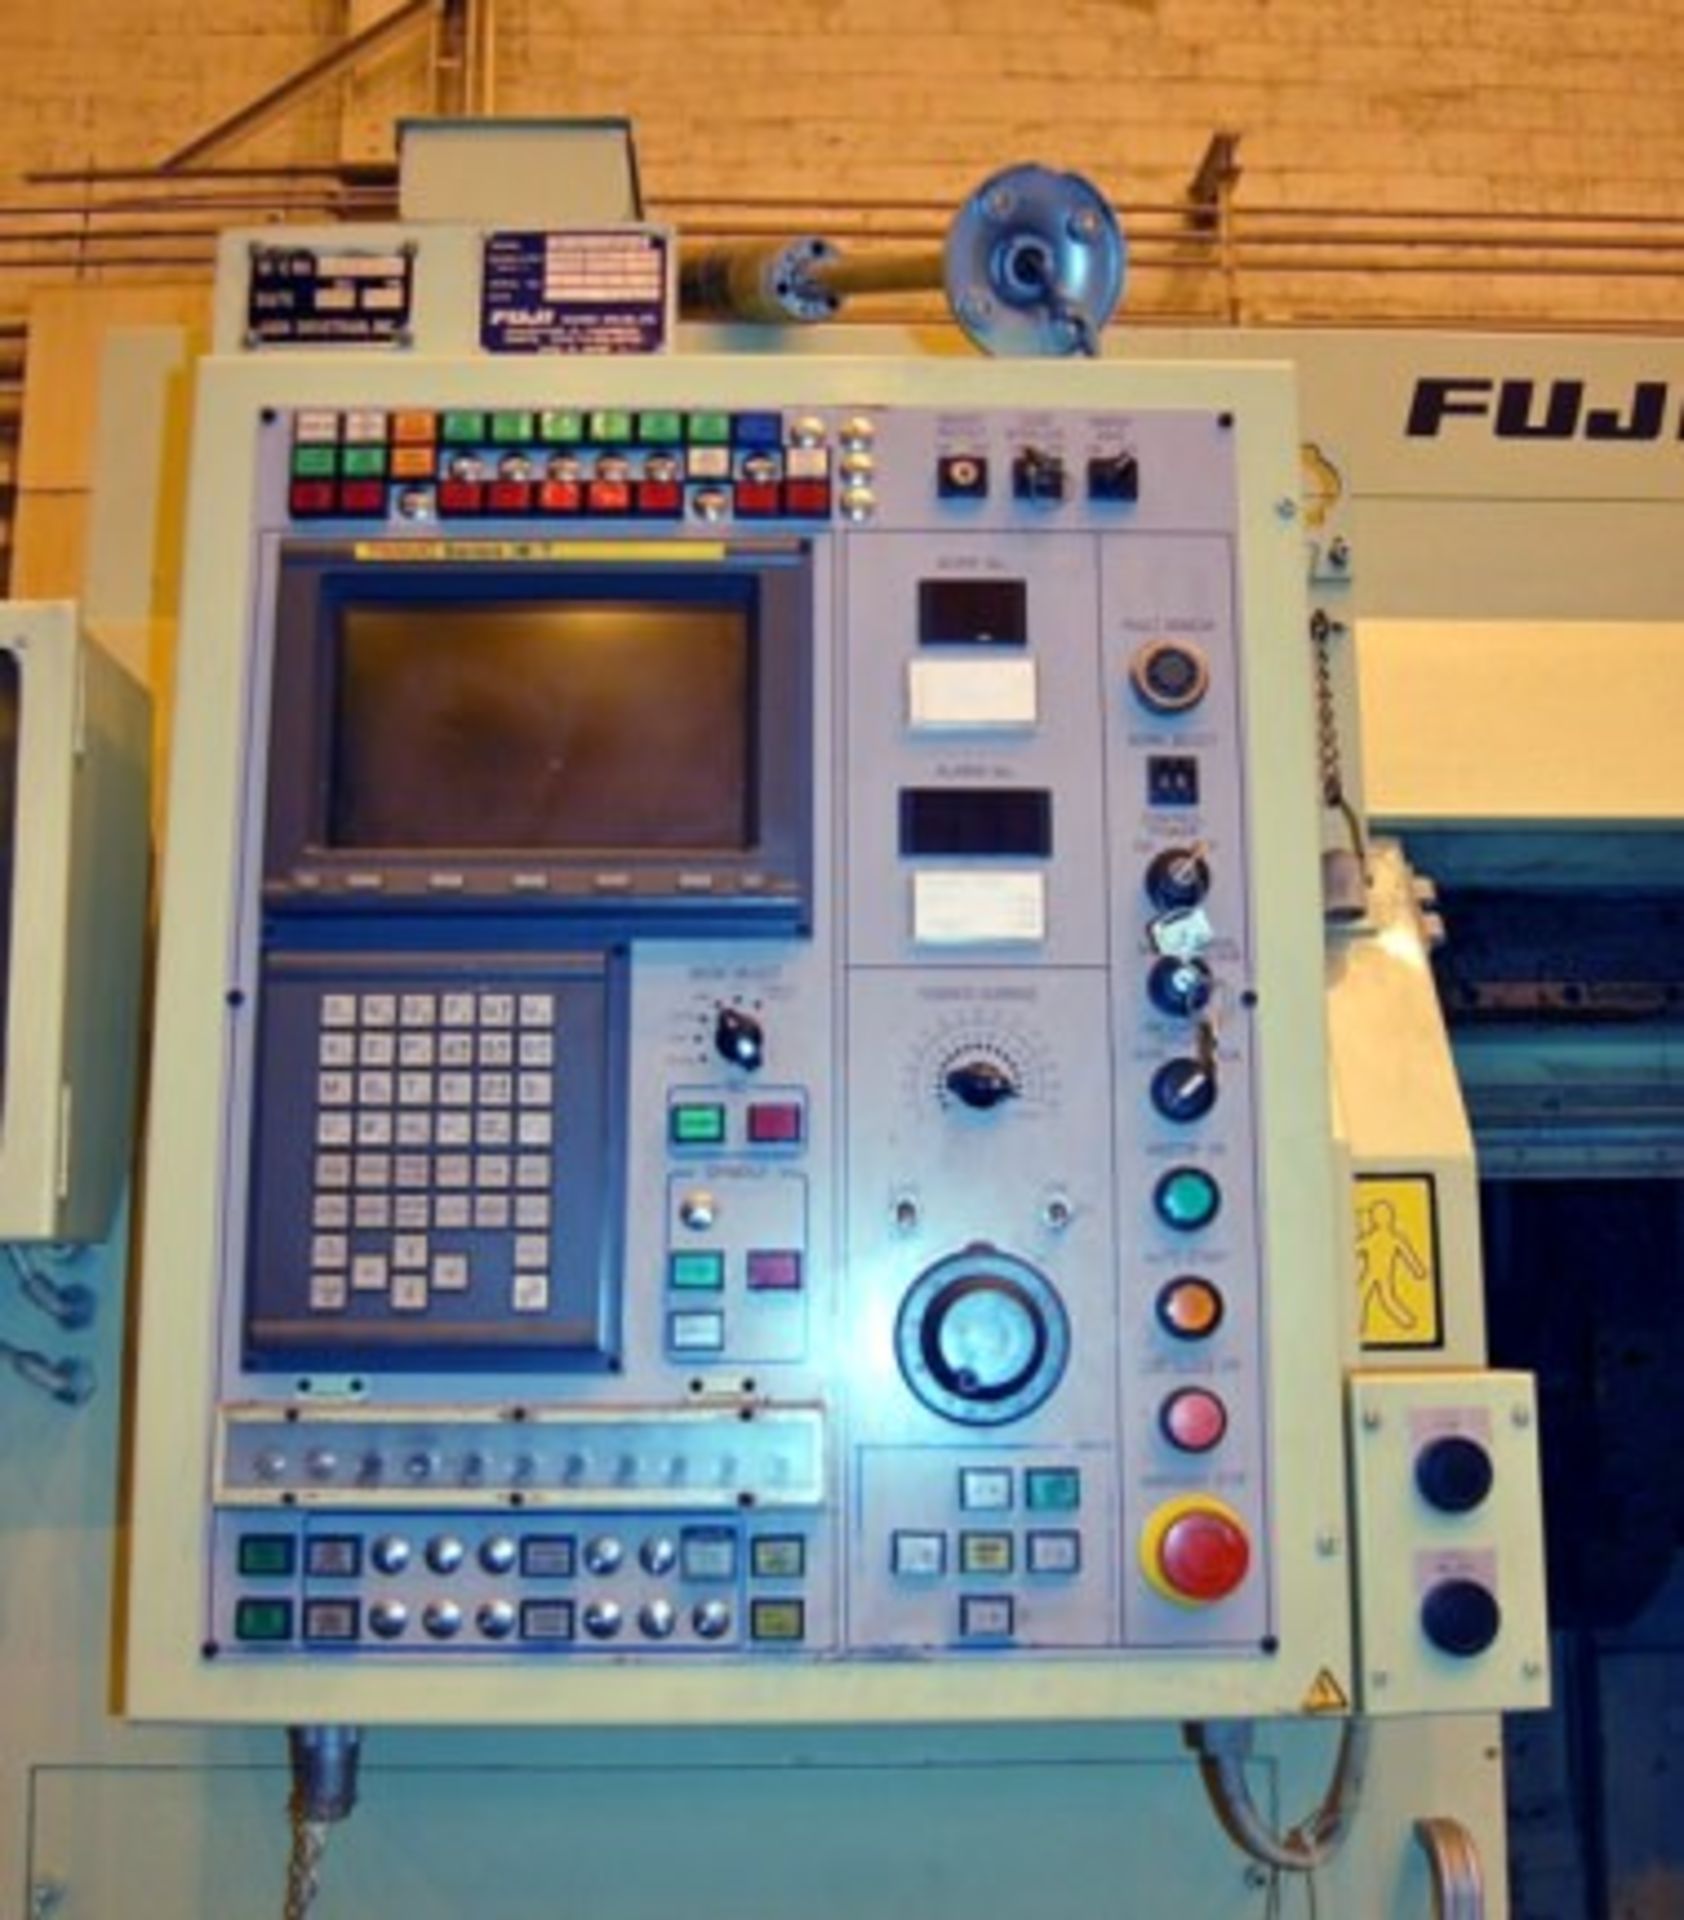 FUJI ANS-40T CNC TURNING CENTER - Image 2 of 14